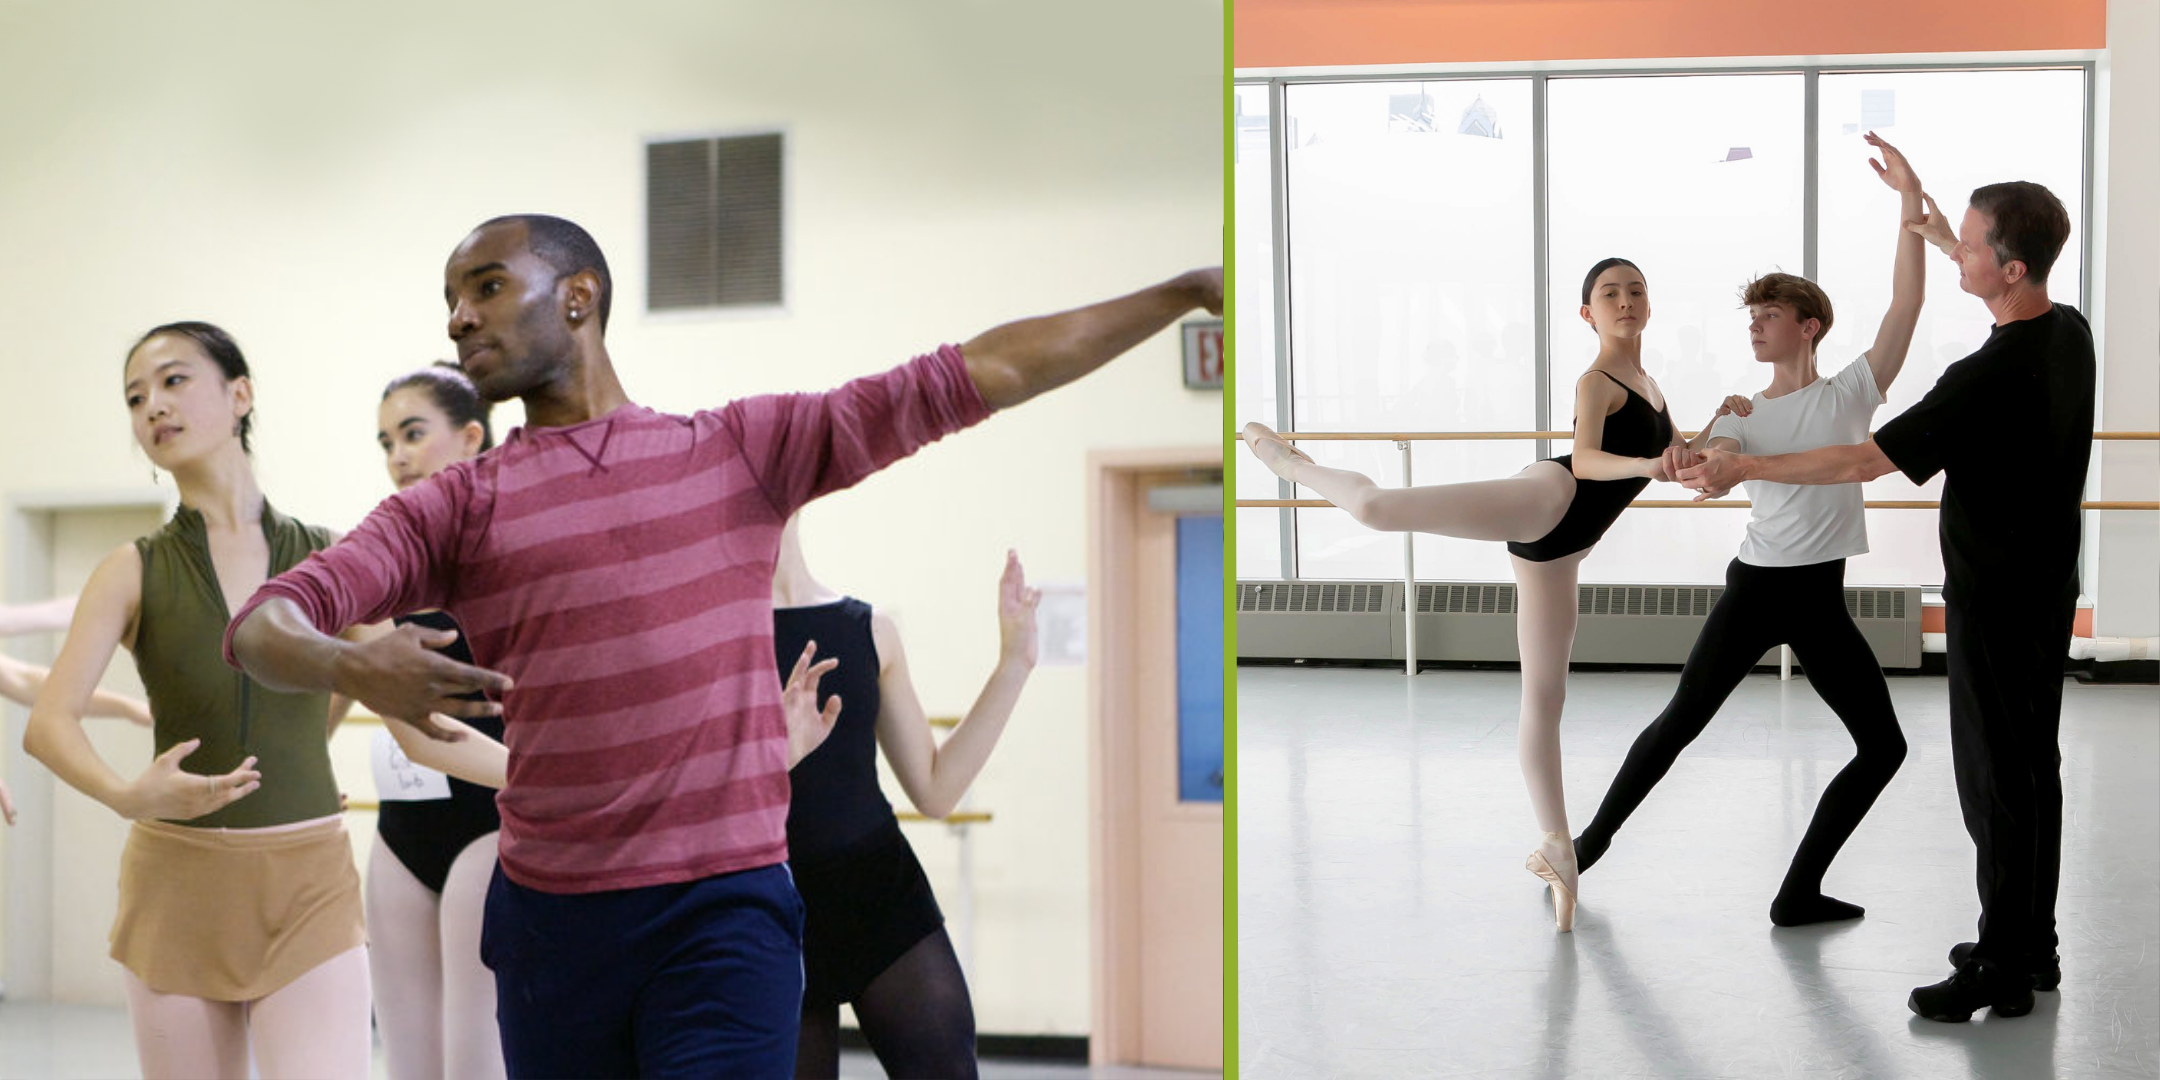 Collage headshots of 3 dance educators/entrepreneurs